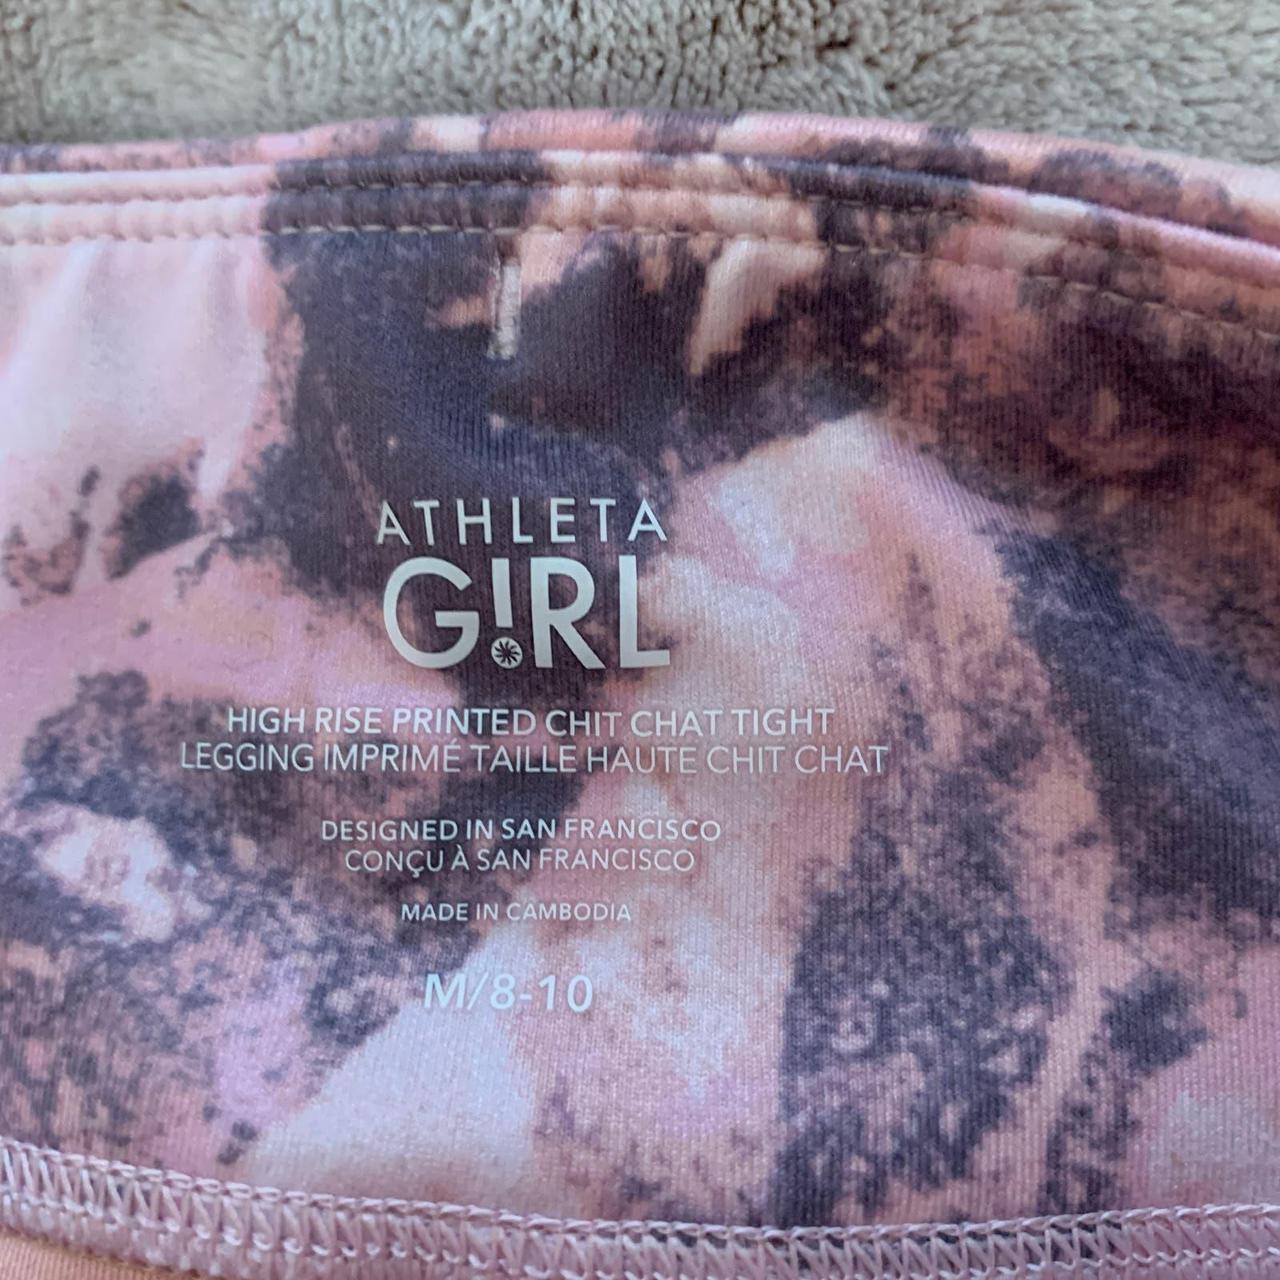 Athleta Girl Printed Chit Chat Tight